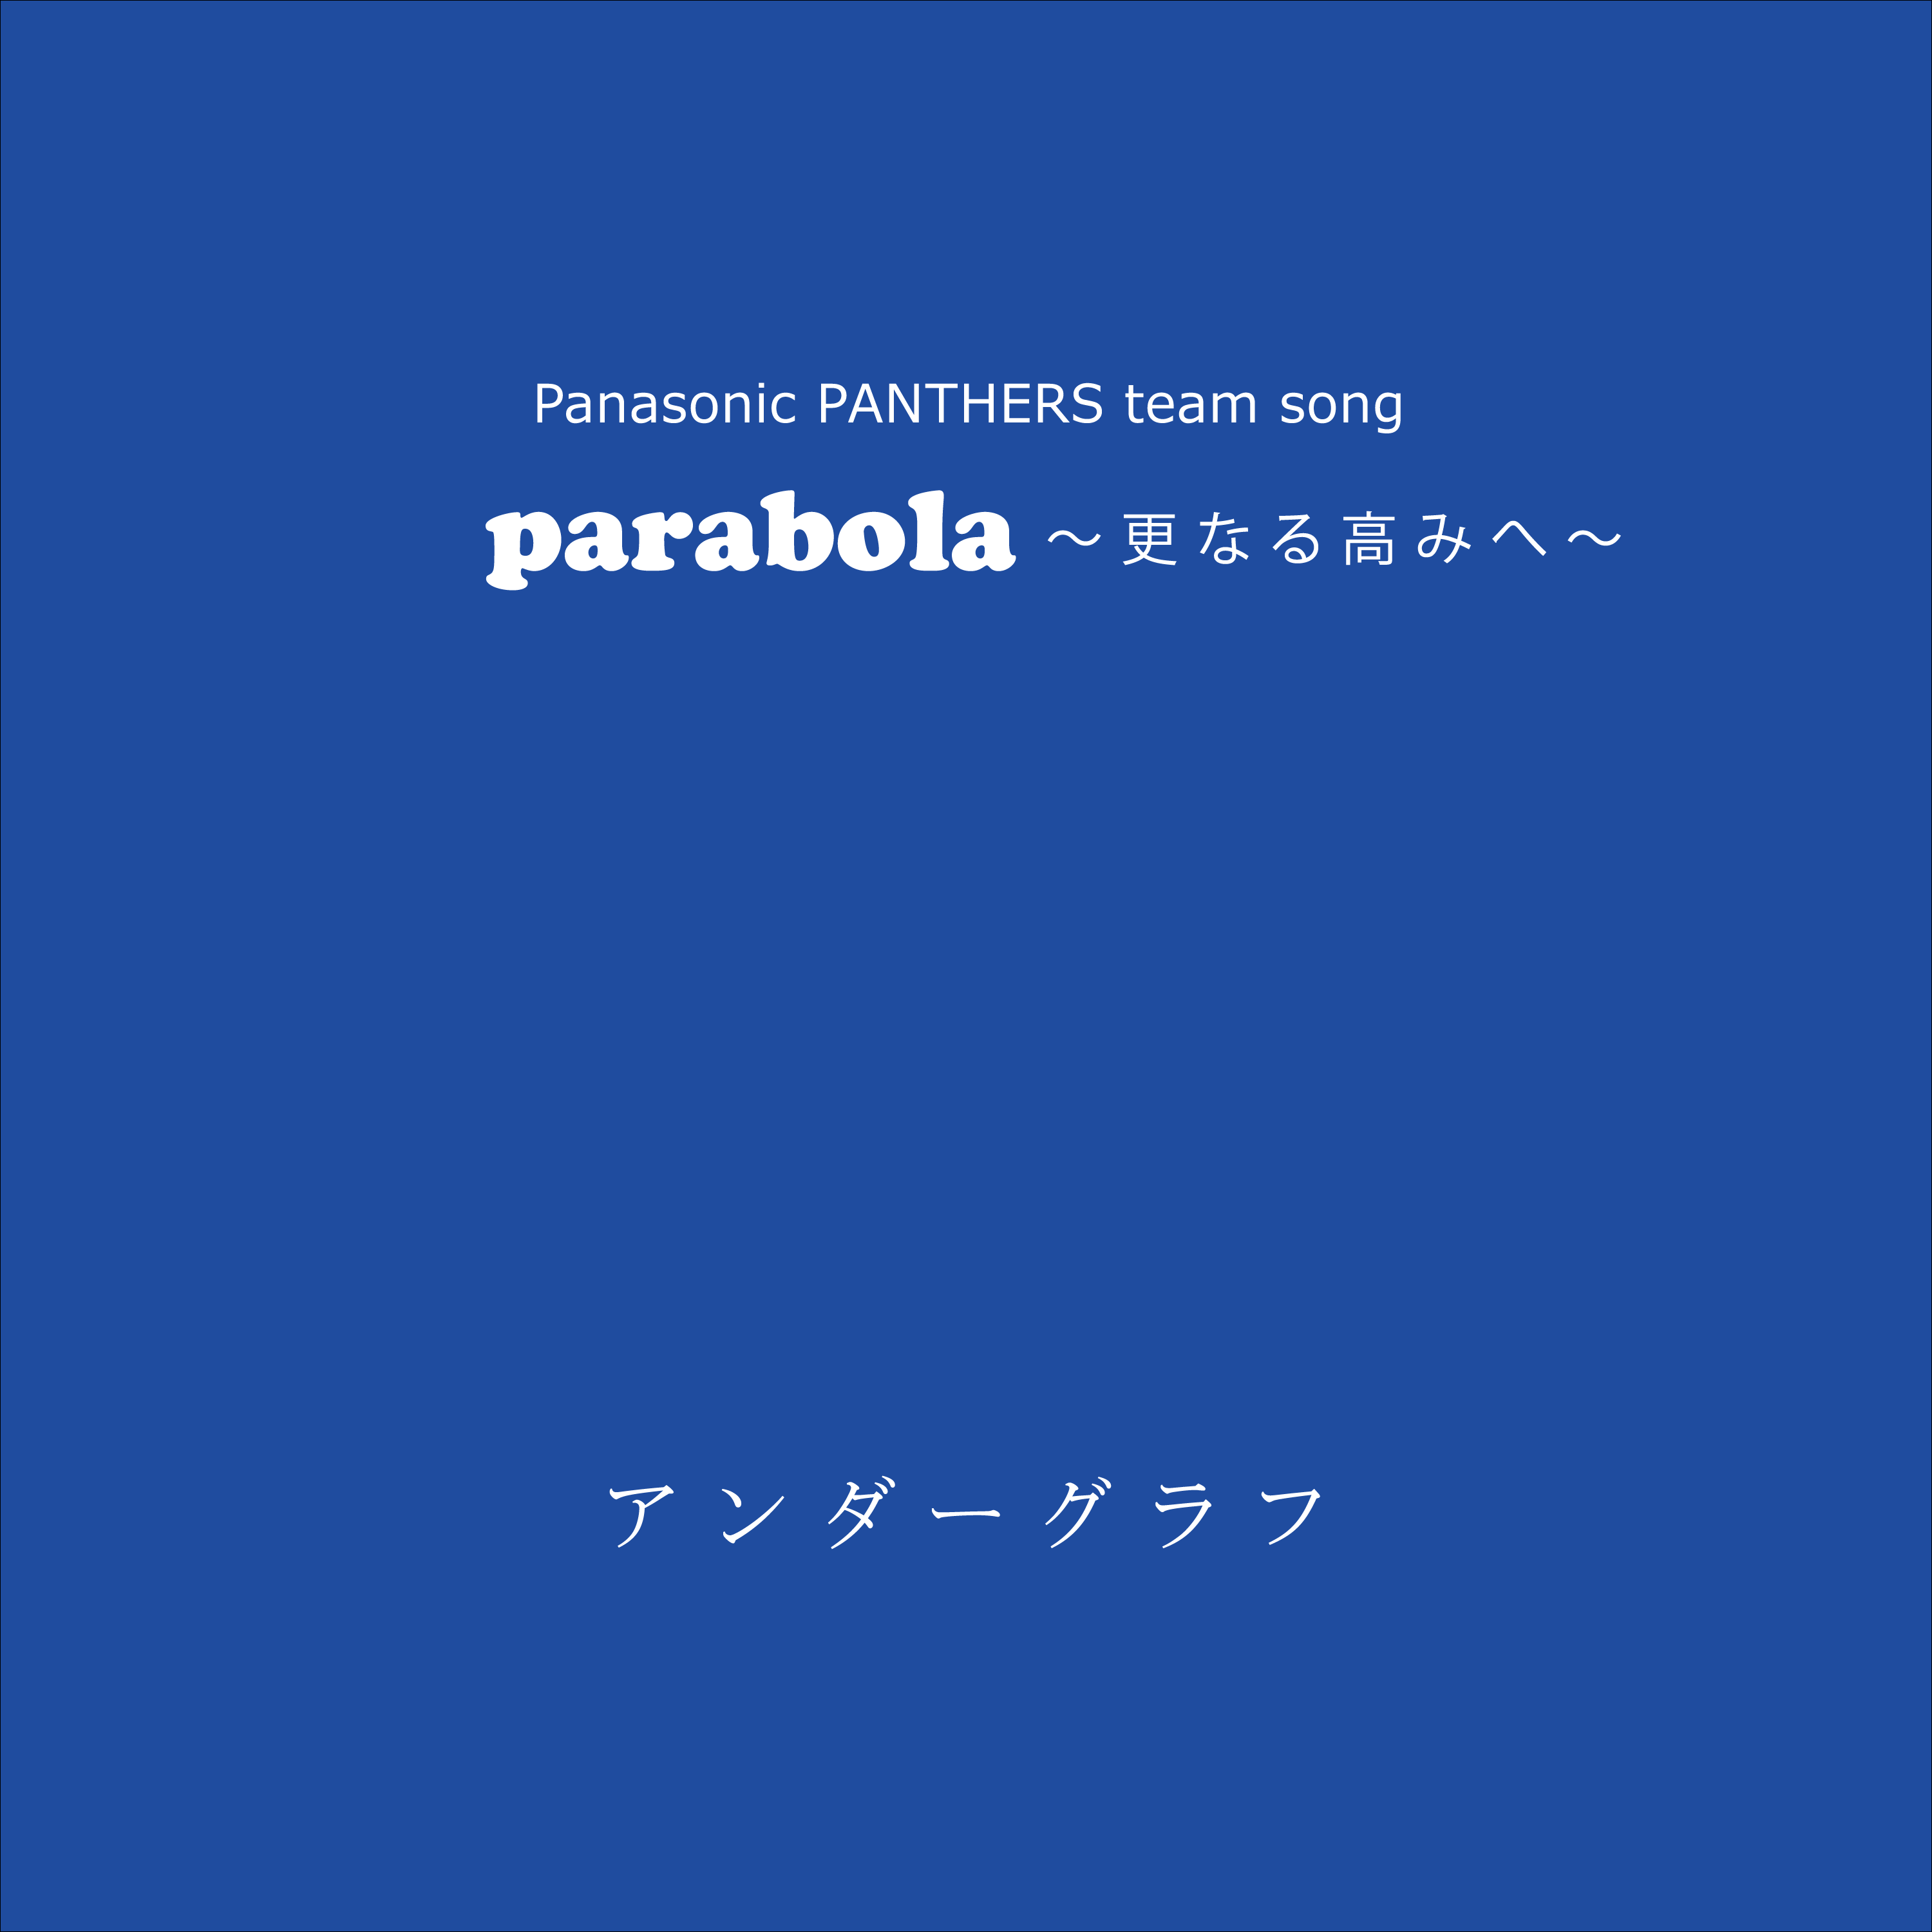 Parabola_jk3